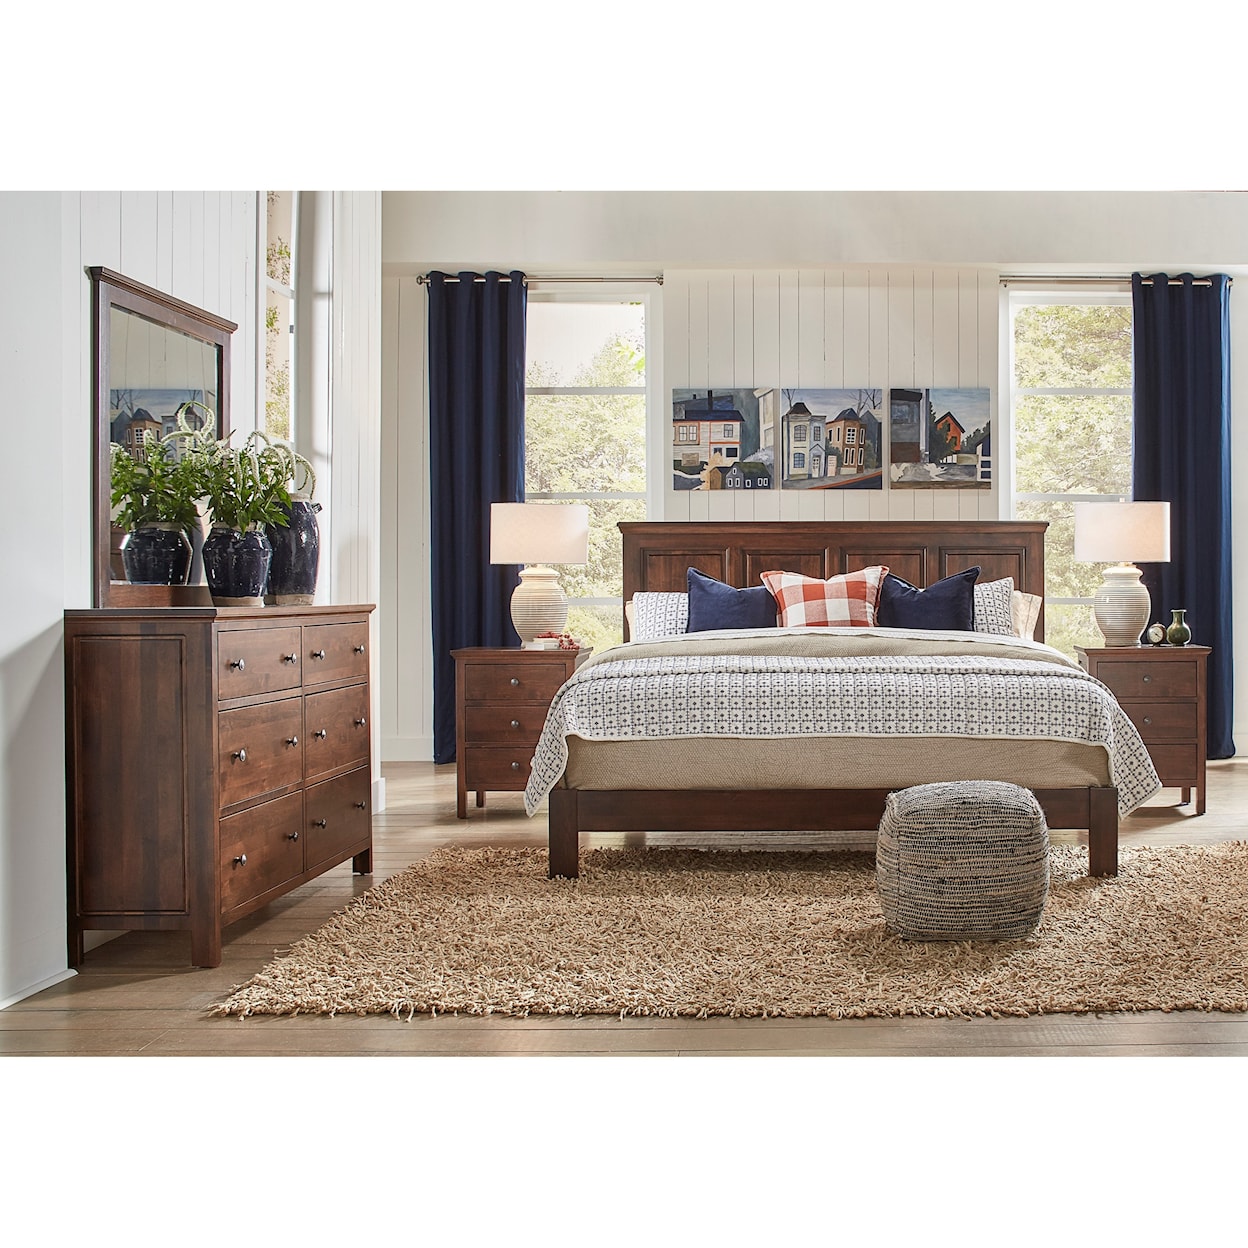 Archbold Furniture Heritage Raised Panel Bed Bedroom Group